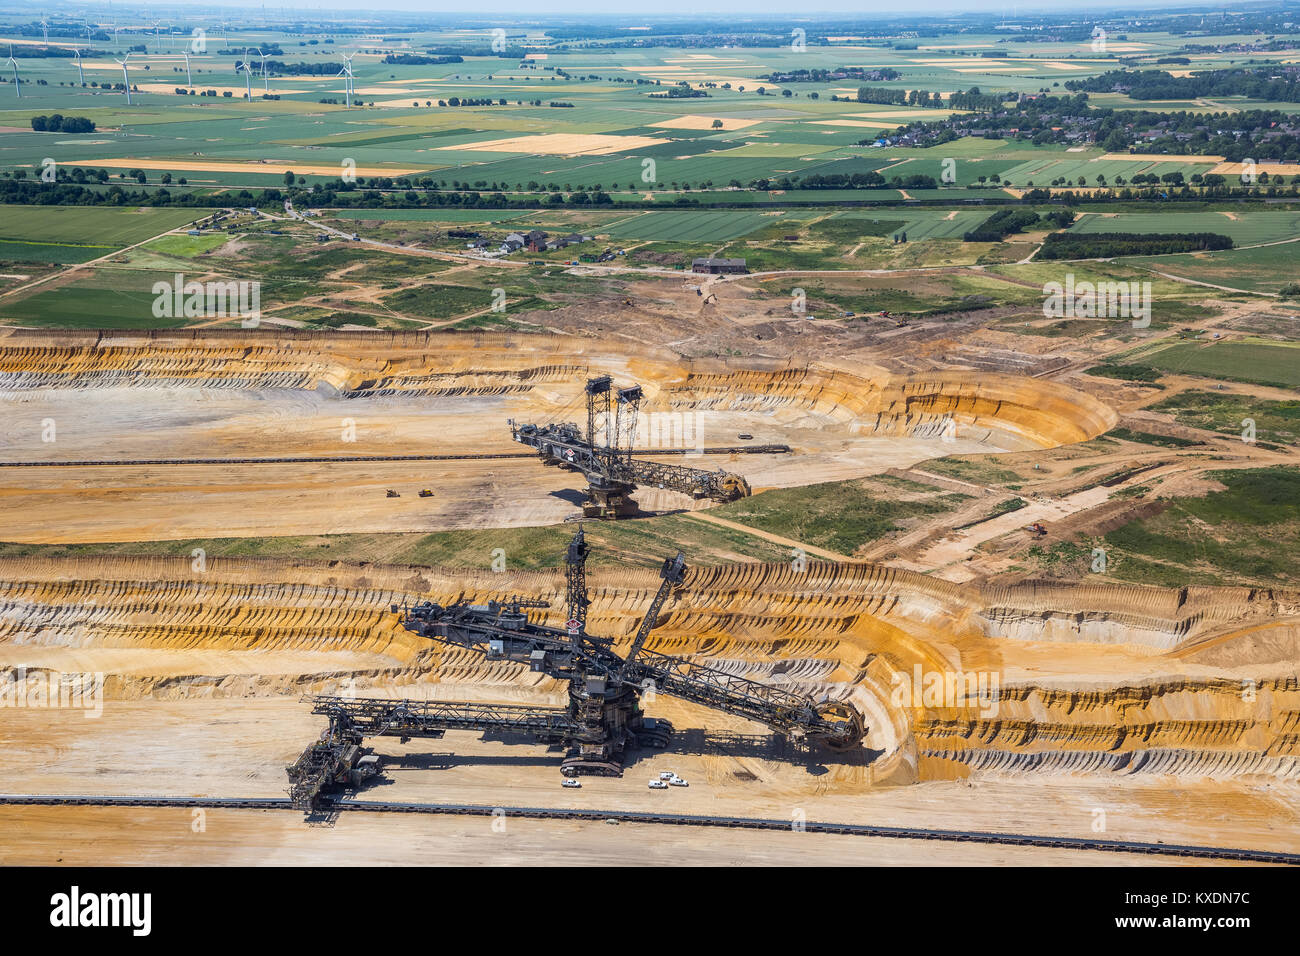 La lignite carbone-escavatore, a cielo aperto della miniera di lignite Garzweiler, RWE-Power, Rheinische Braunkohlerevier, Borschemich, Jüchen Foto Stock